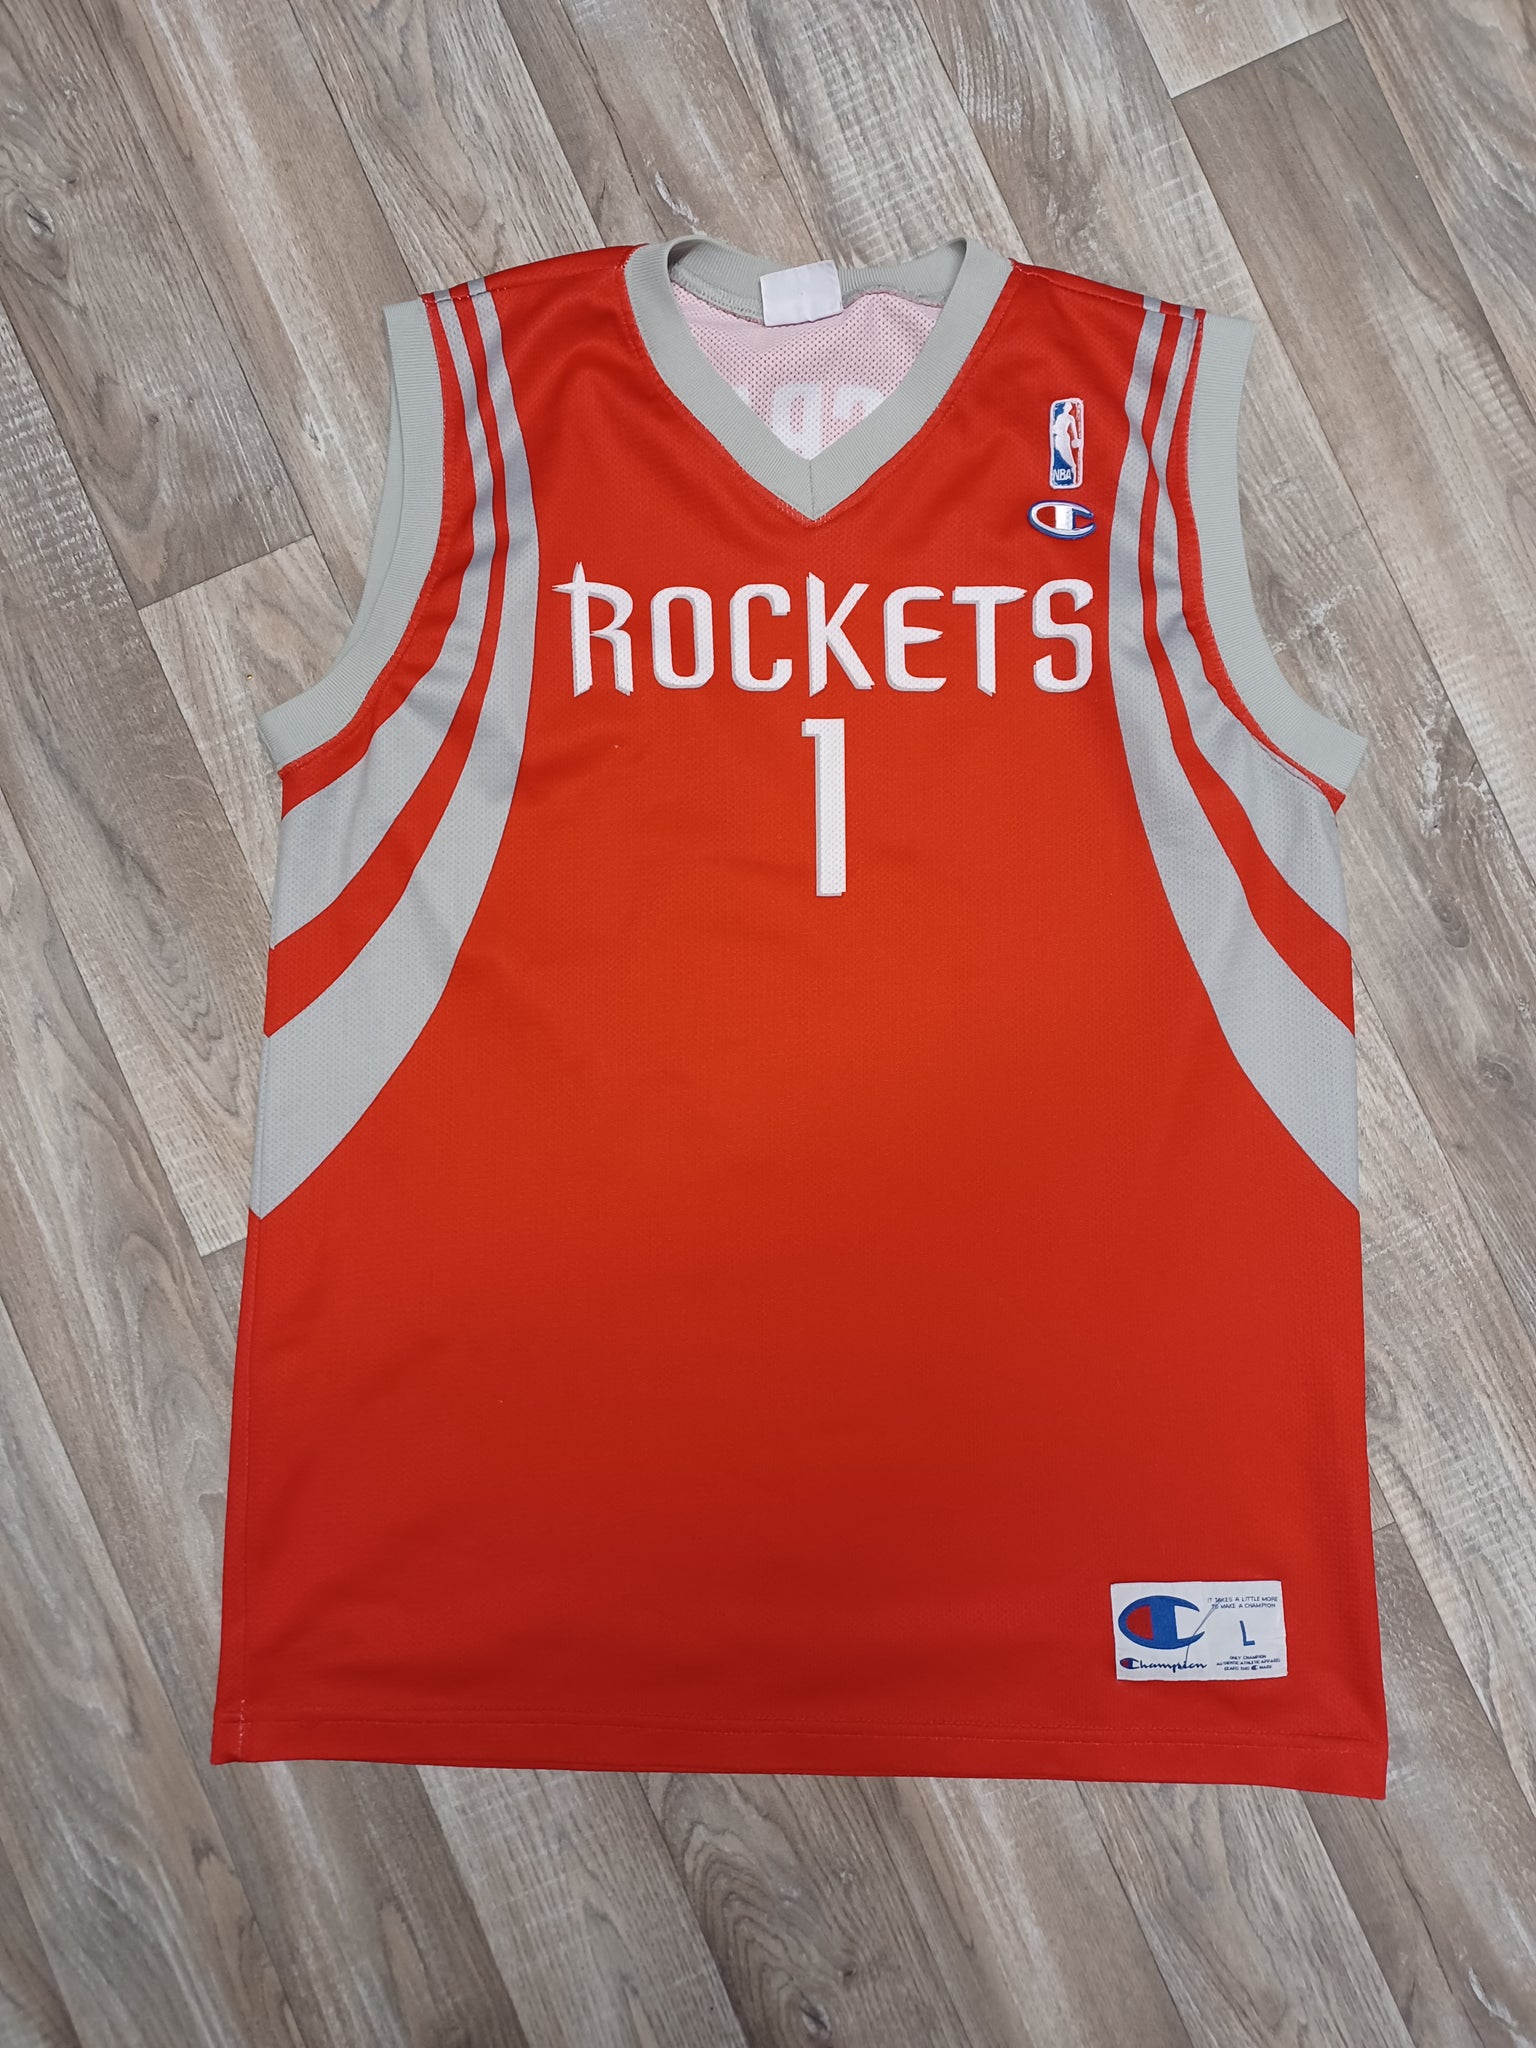 Tracy McGrady Houston Rockets NBA Jerseys for sale